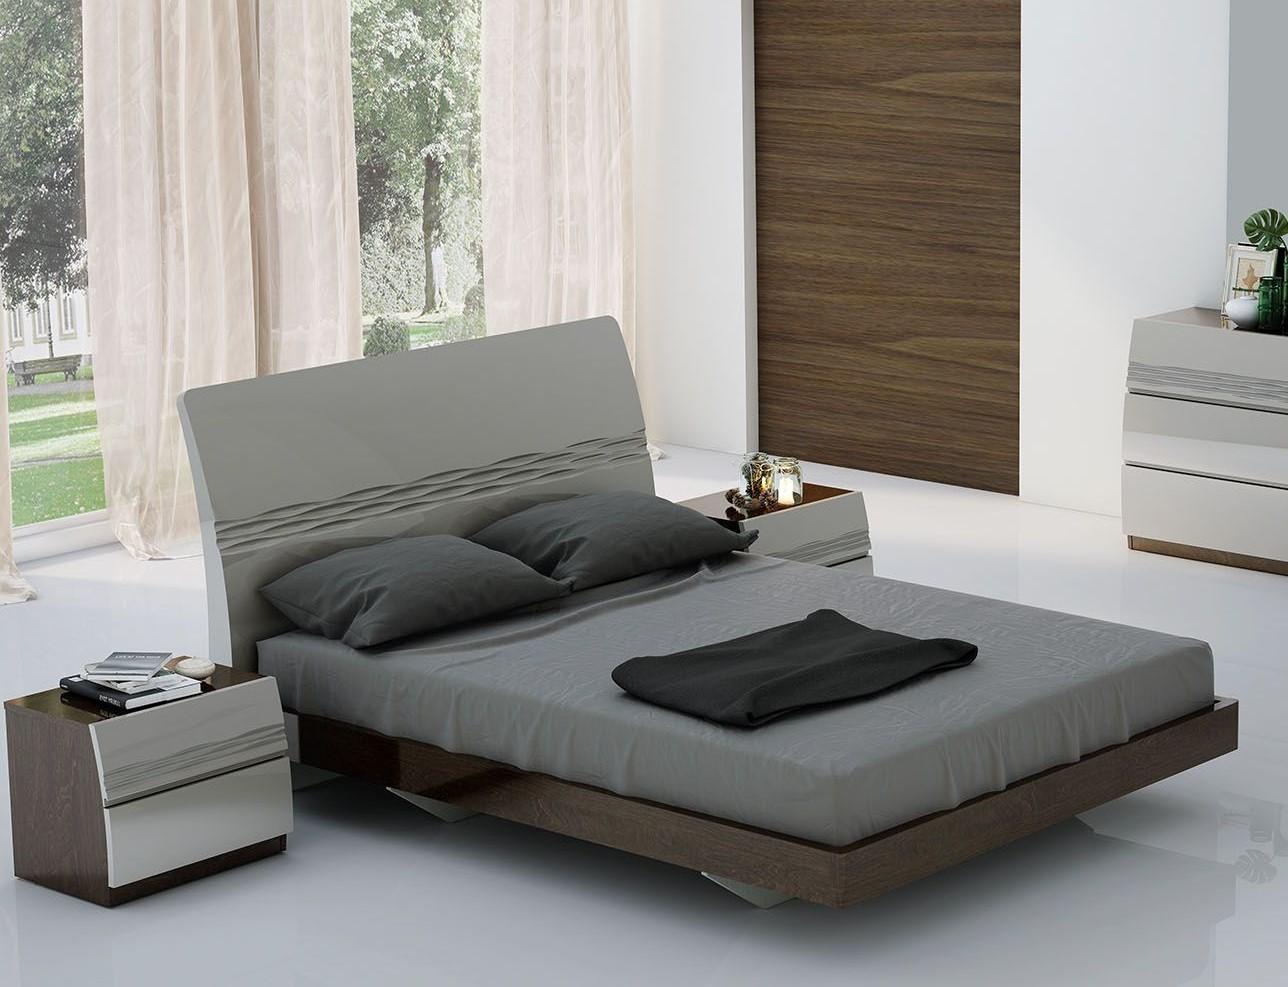 

    
American Eagle Furniture B-P102-EK Platform Bedroom Set Brown/Light Gray B-P102-EK-Set-2
